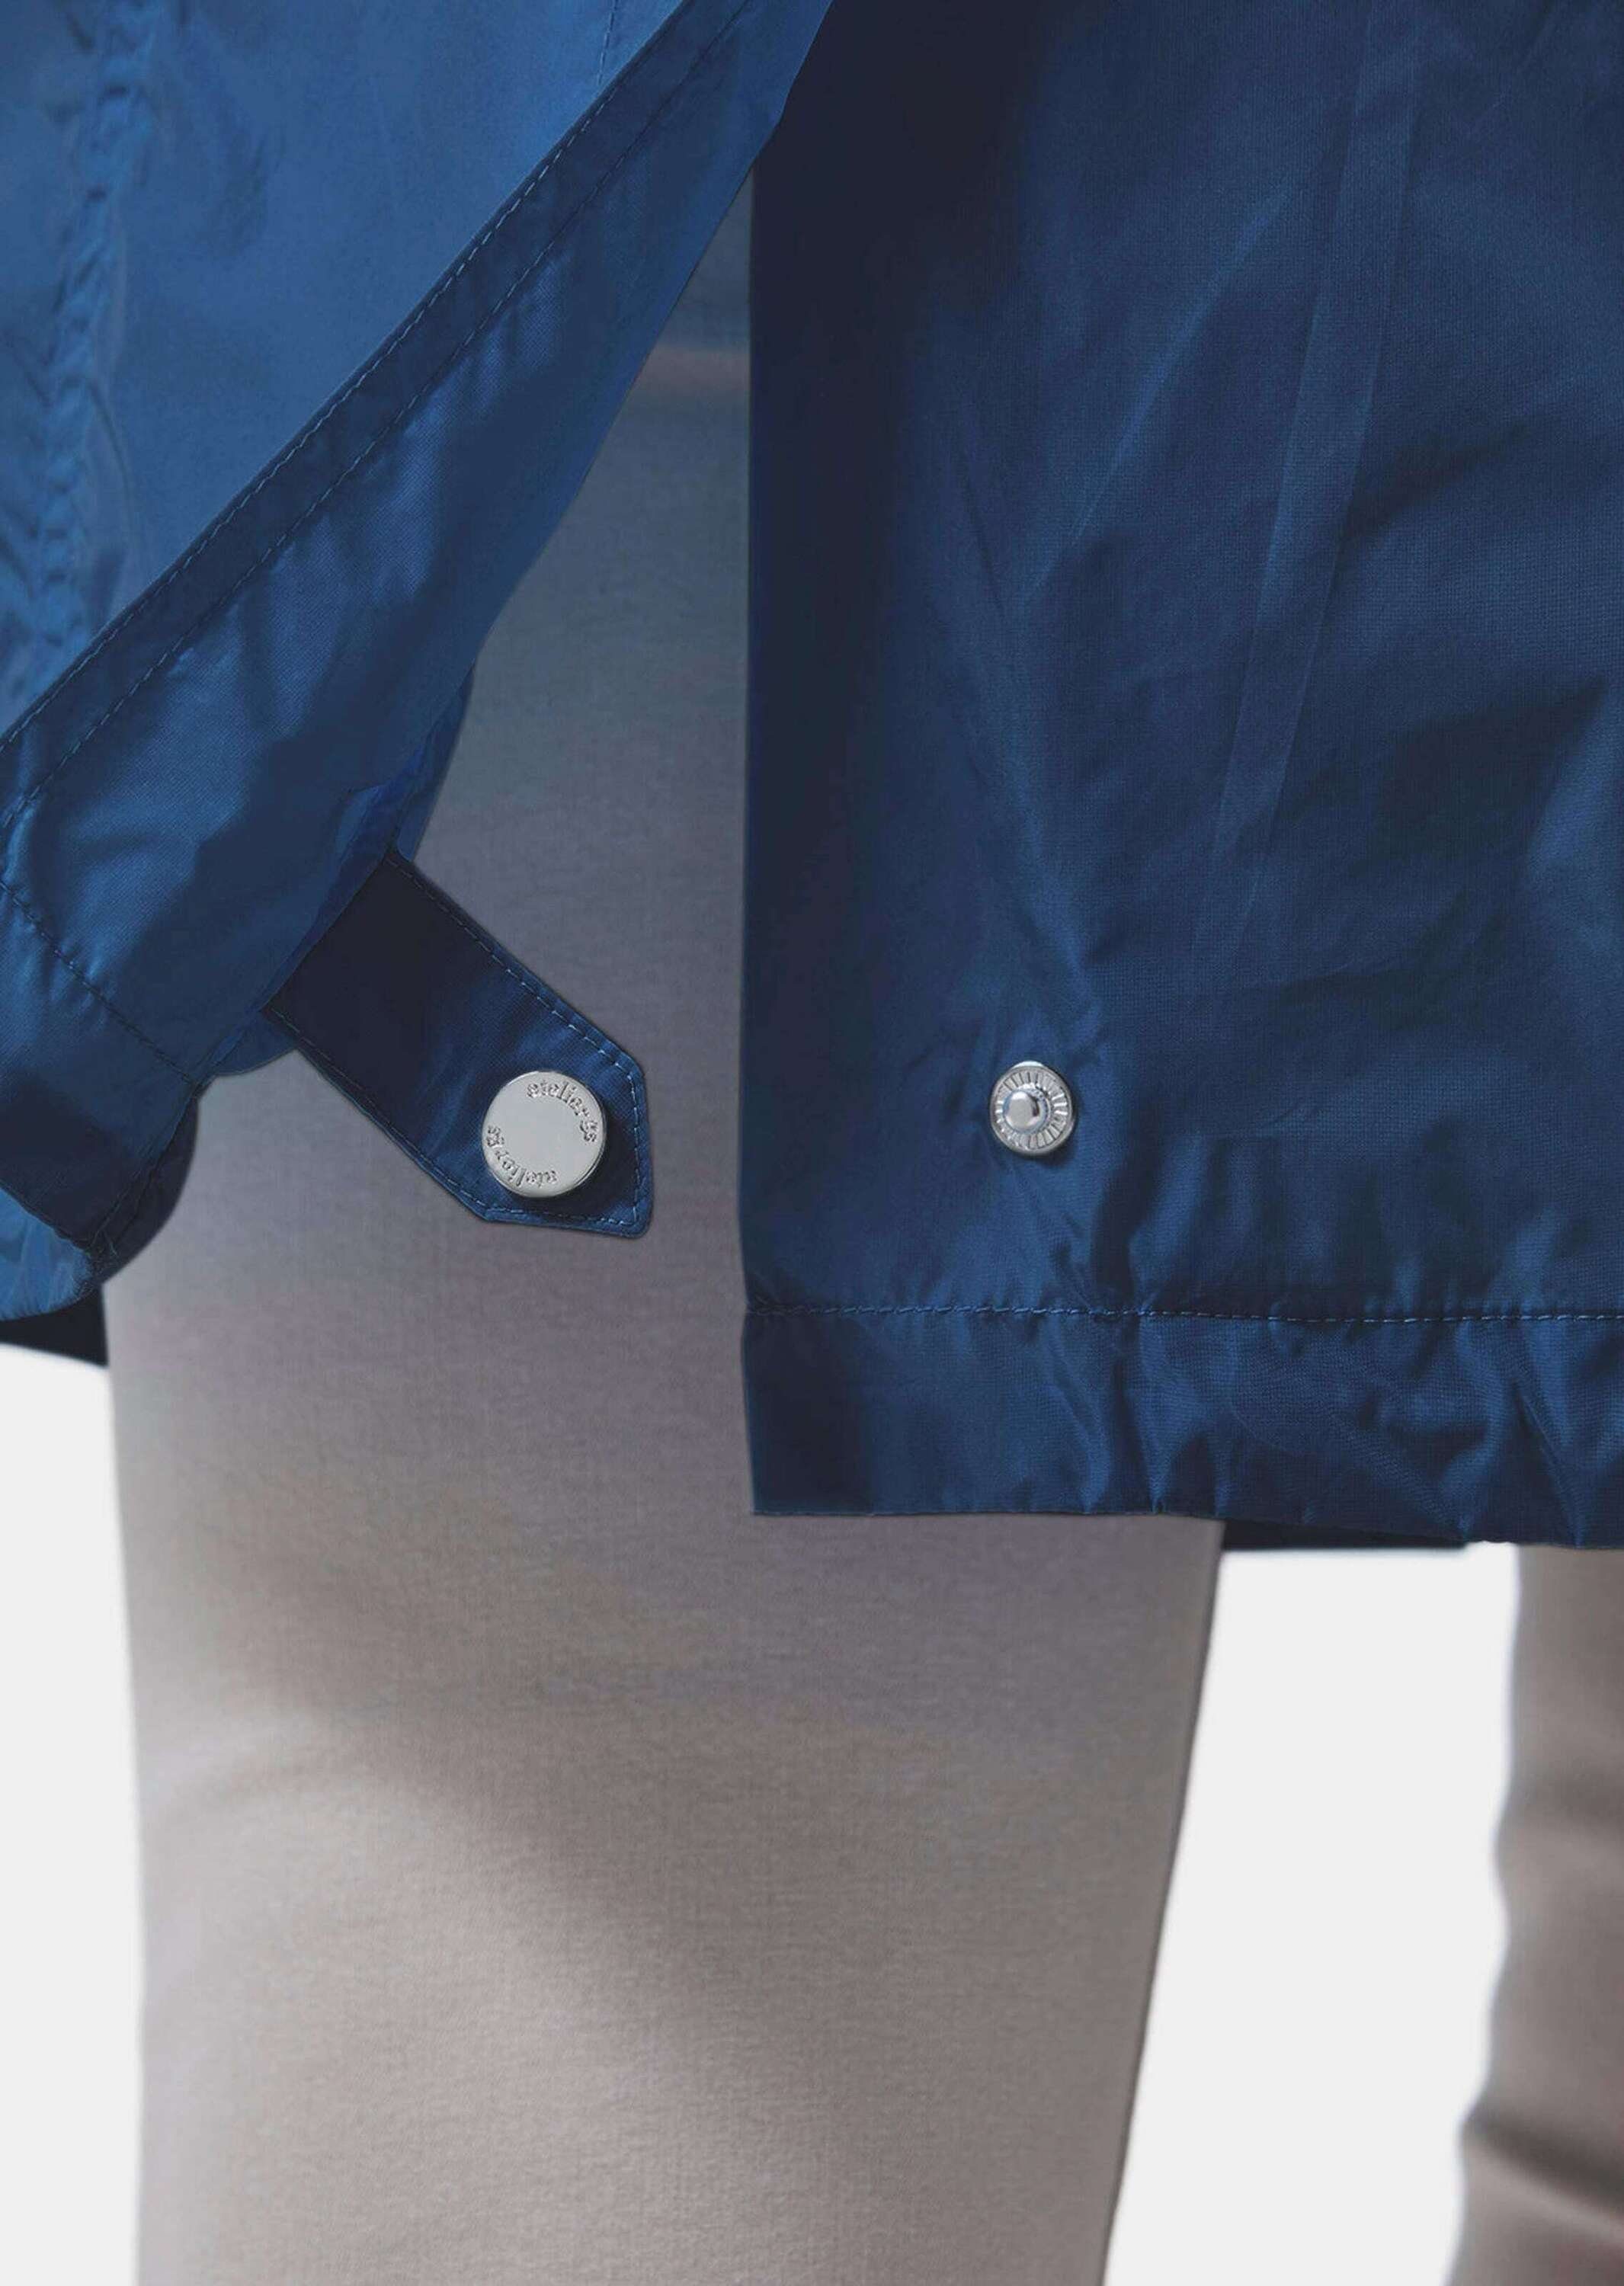 GOLDNER Regen funktionalem Parka leichter Outdoorjacke Trendiger aus Material royalblau